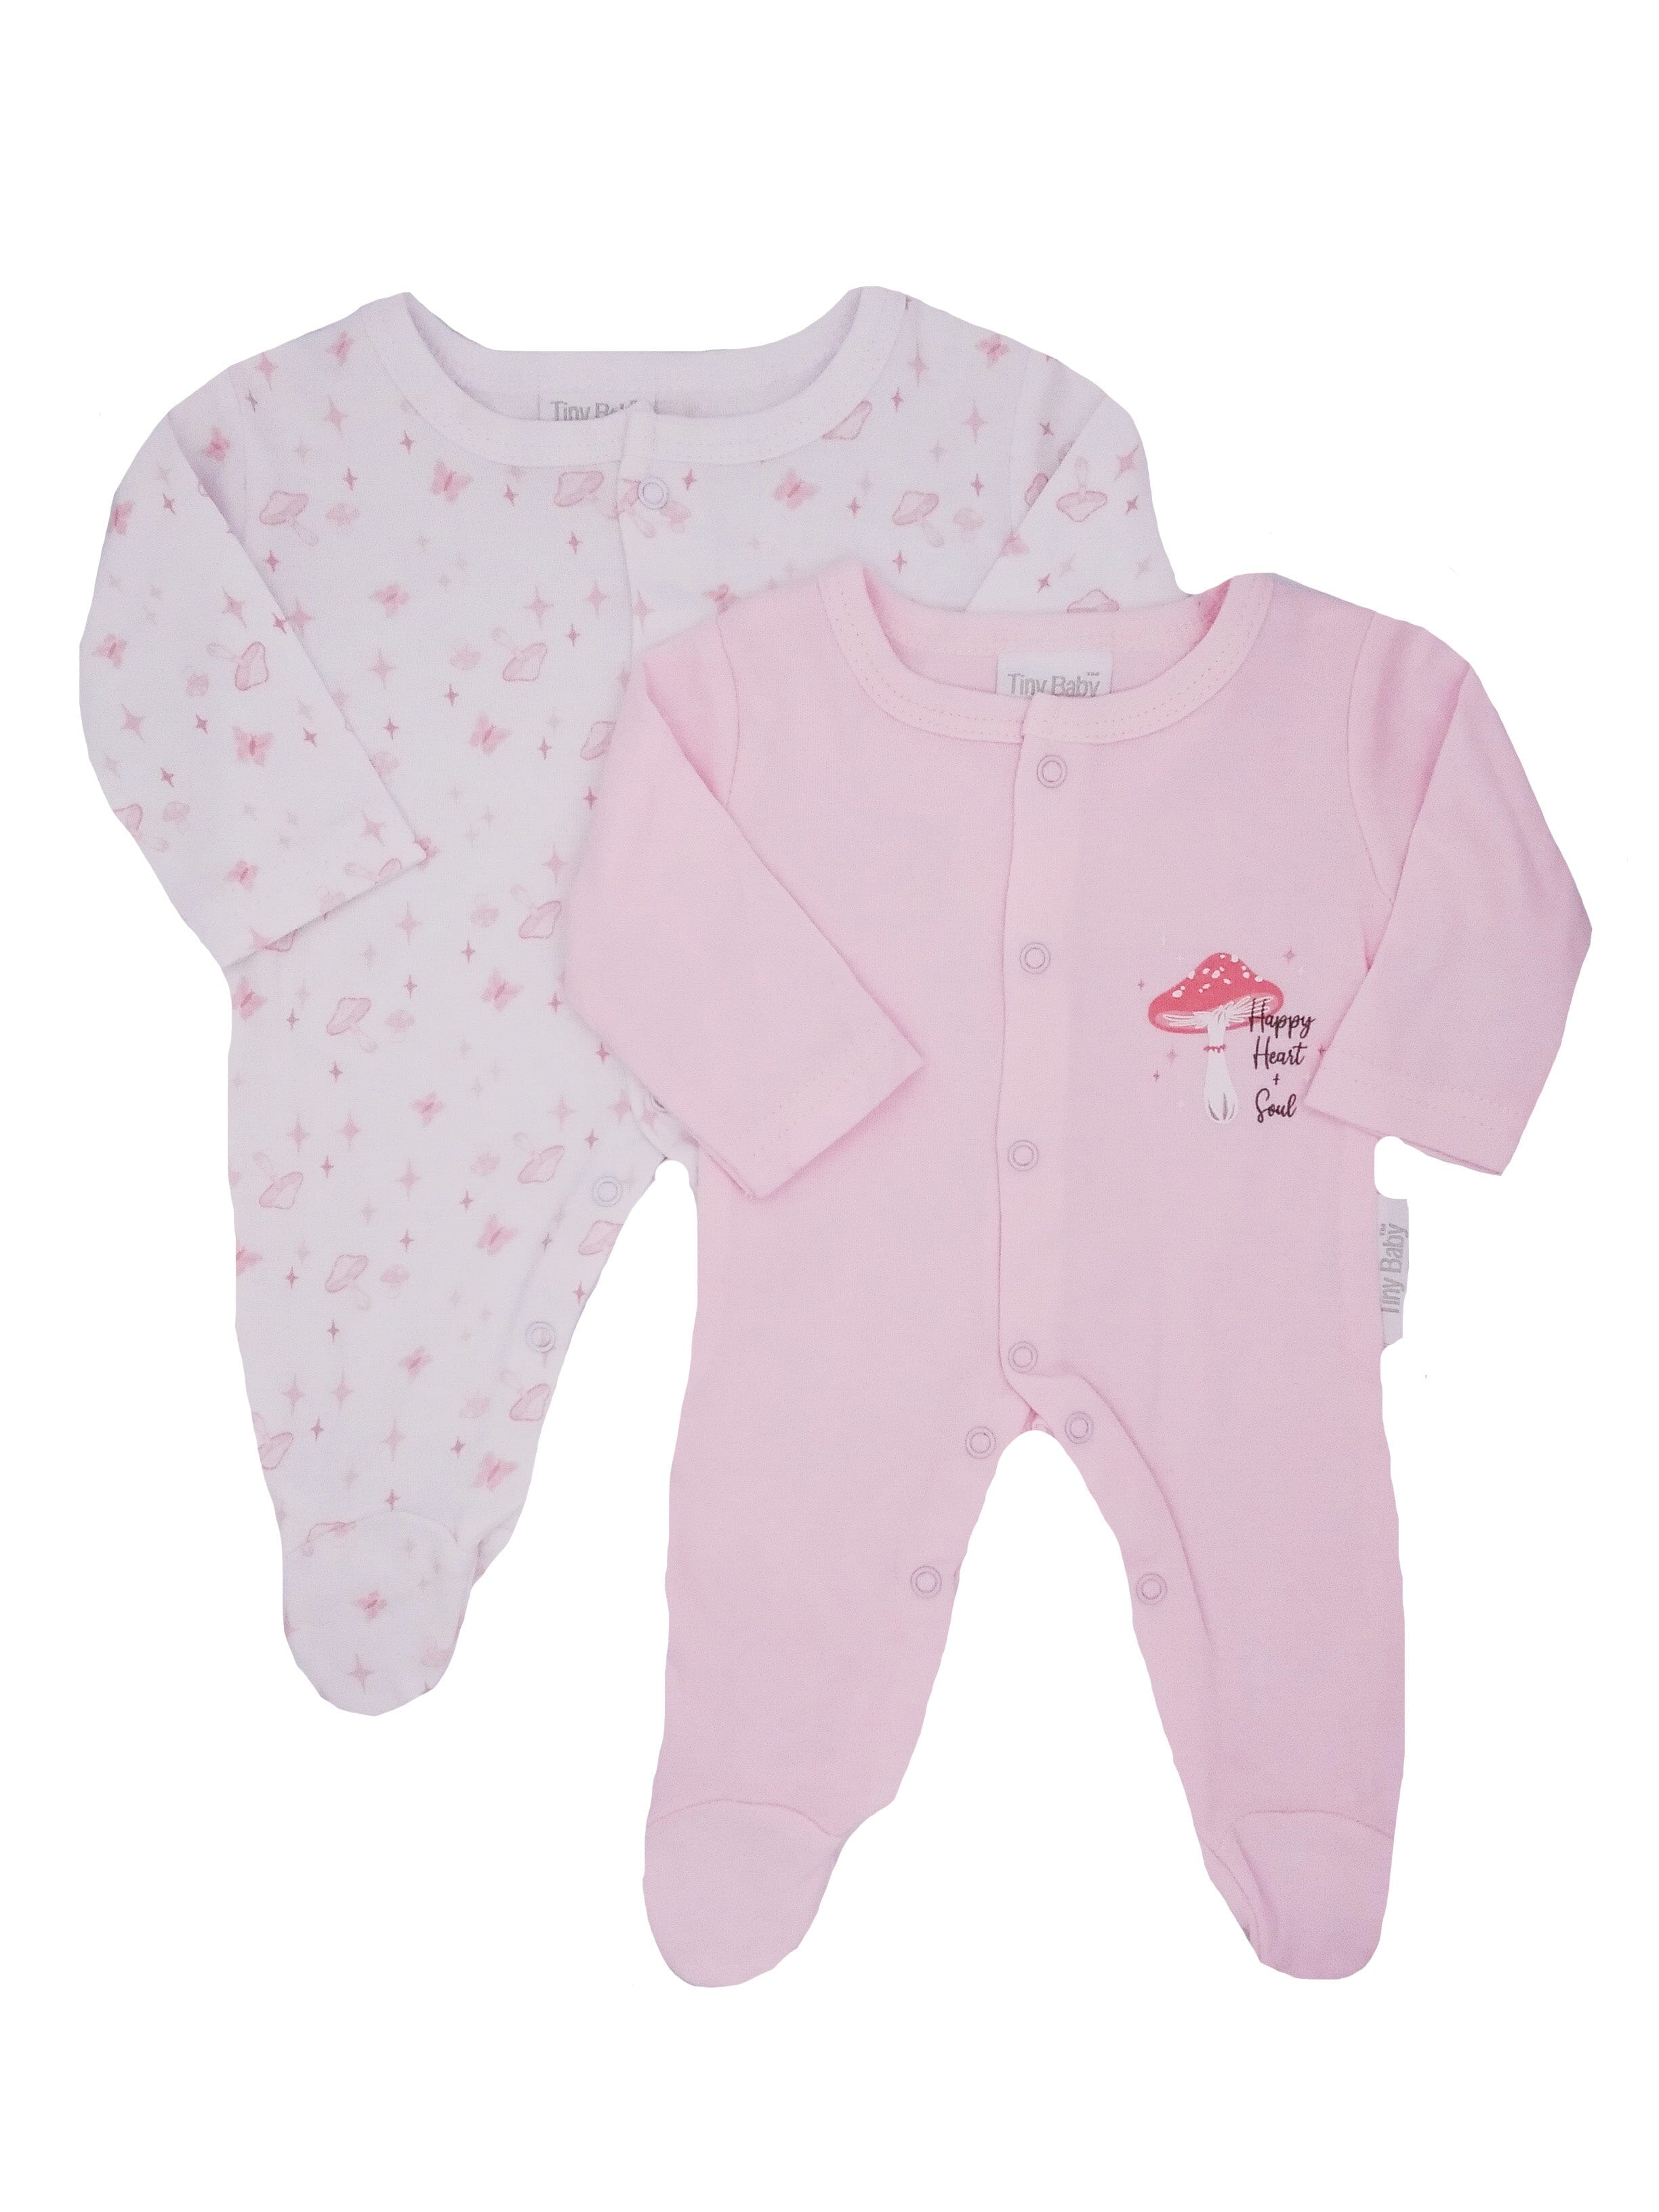 2 Pack Toadstool Sleepsuits - Pink - Sleepsuit / Babygrow - Tiny Baby